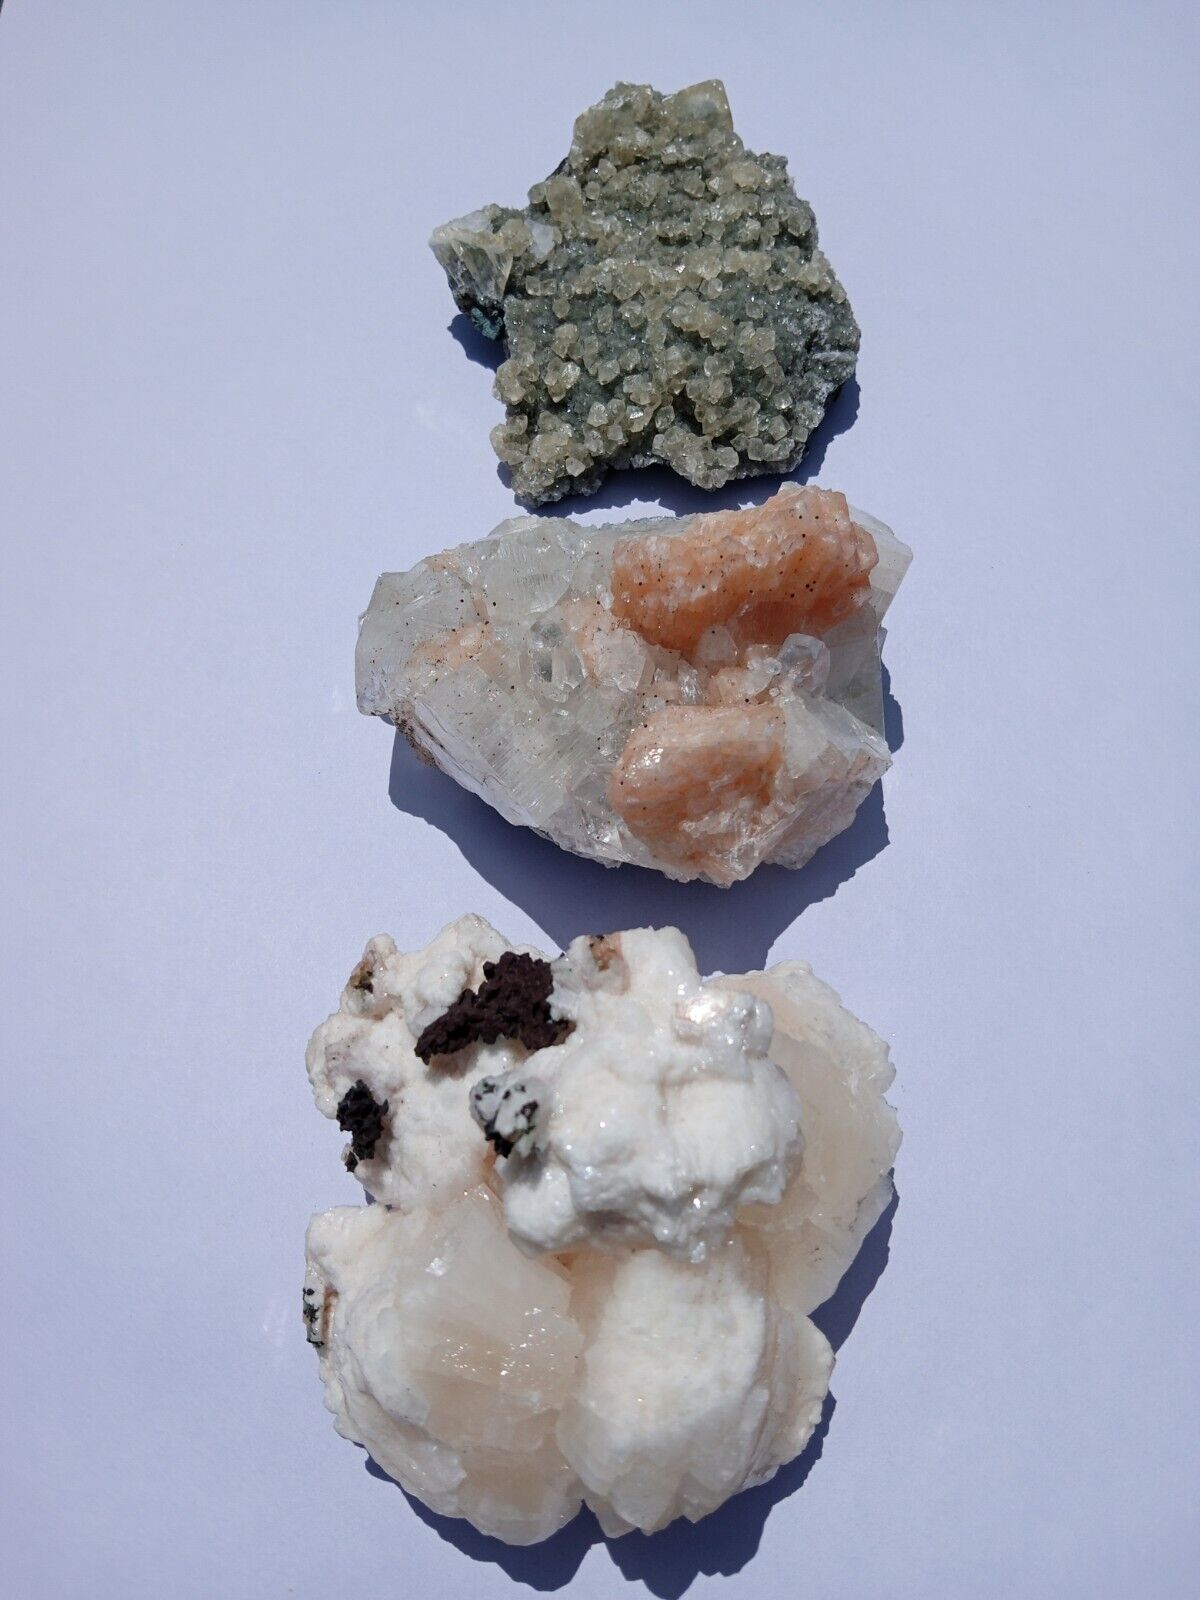 Lot of 3 Choice Mixed Zeolites Crystal, Mineral Specimens U.S seller 1 Lb D3